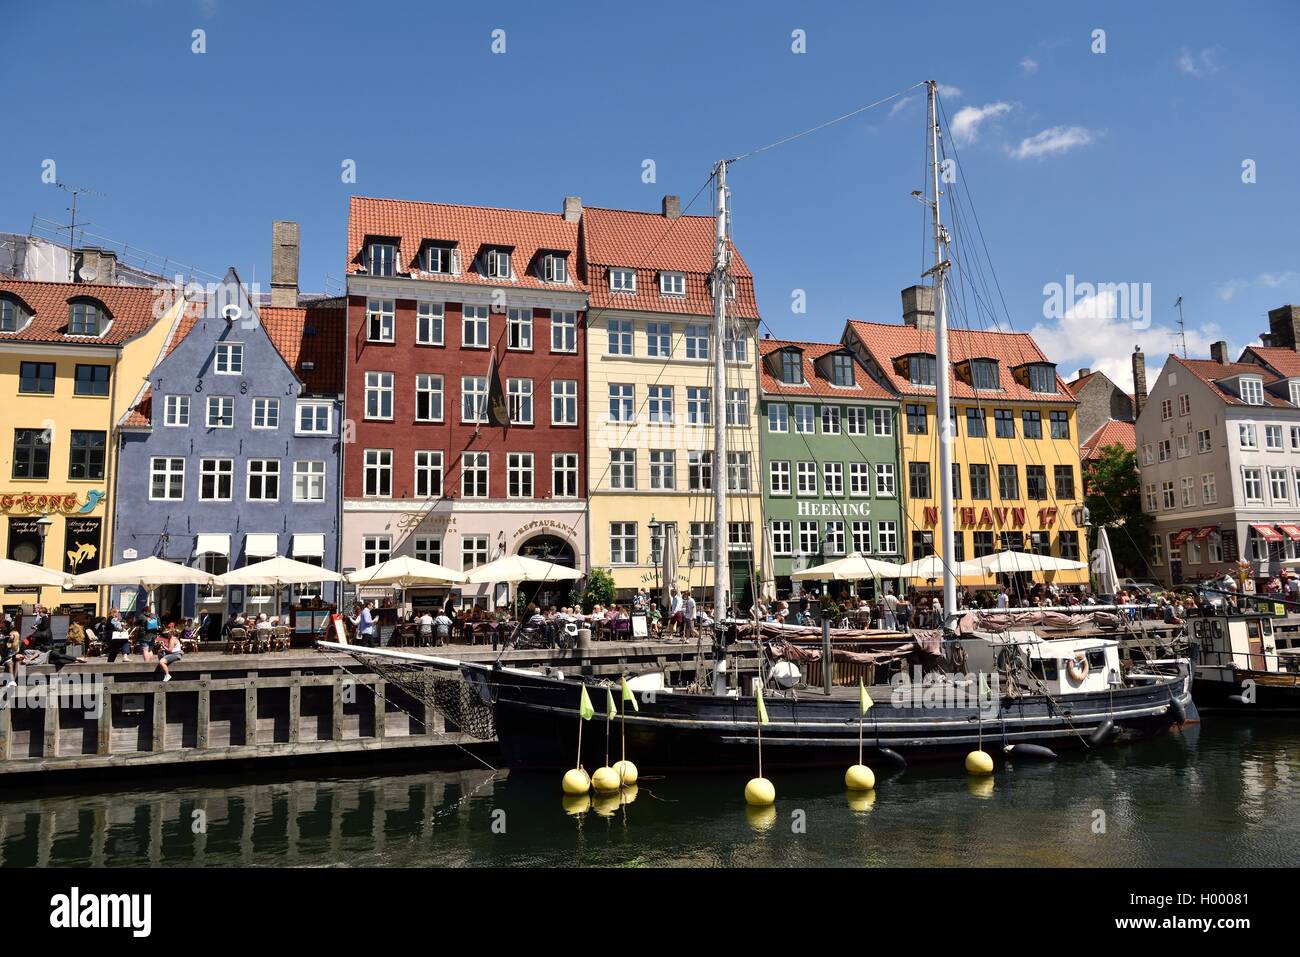 Case colorate al canale, Nyhavn, Copenhagen, Danimarca Foto Stock